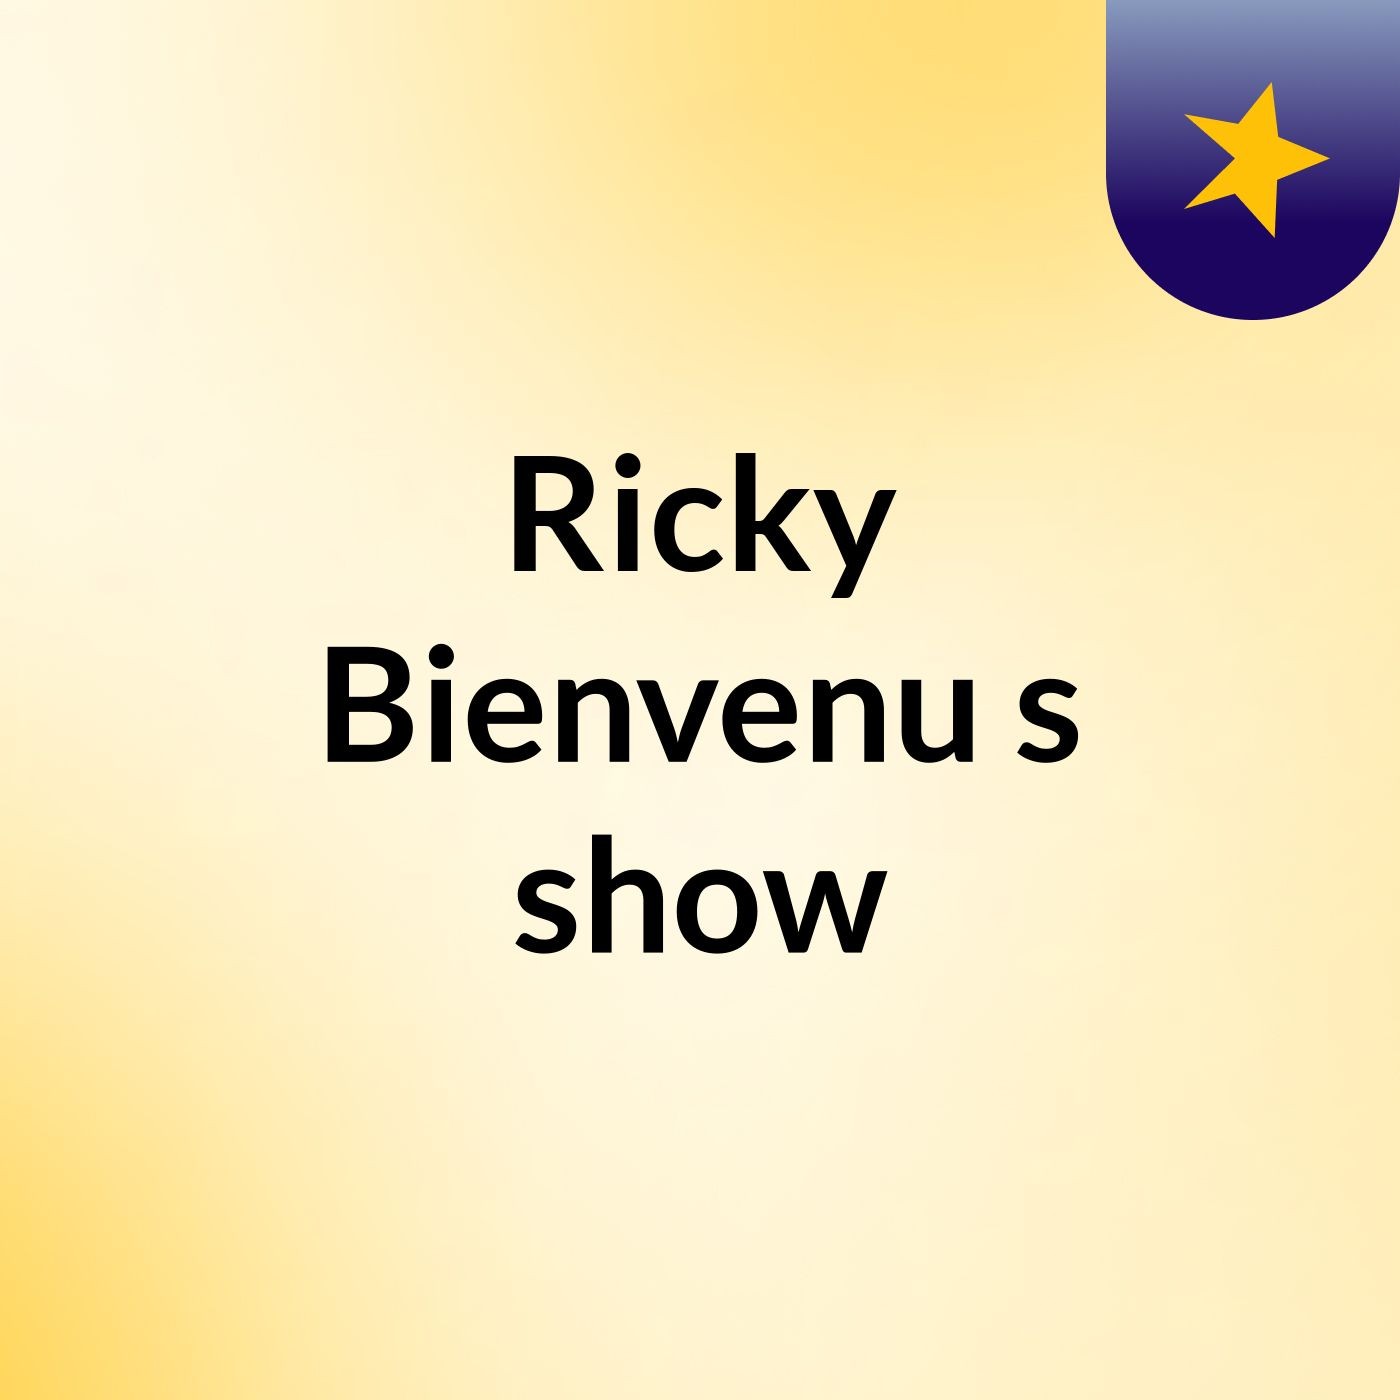 Ricky Bienvenu's show